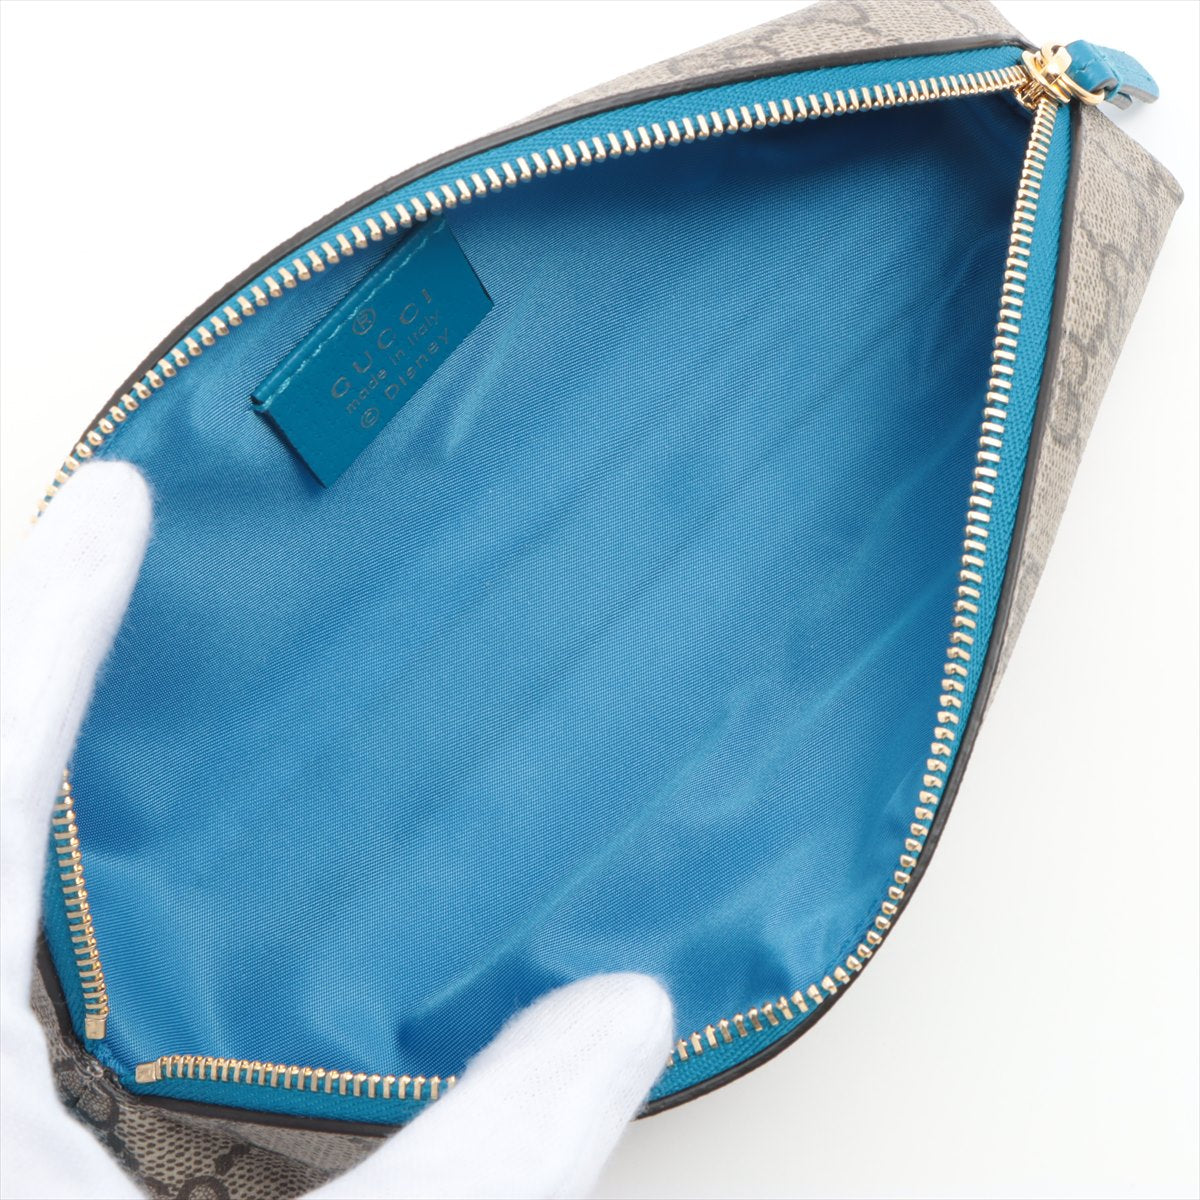 Gucci x Disney GG Supreme 662129 PVC & leather Pen Case Beige x blue